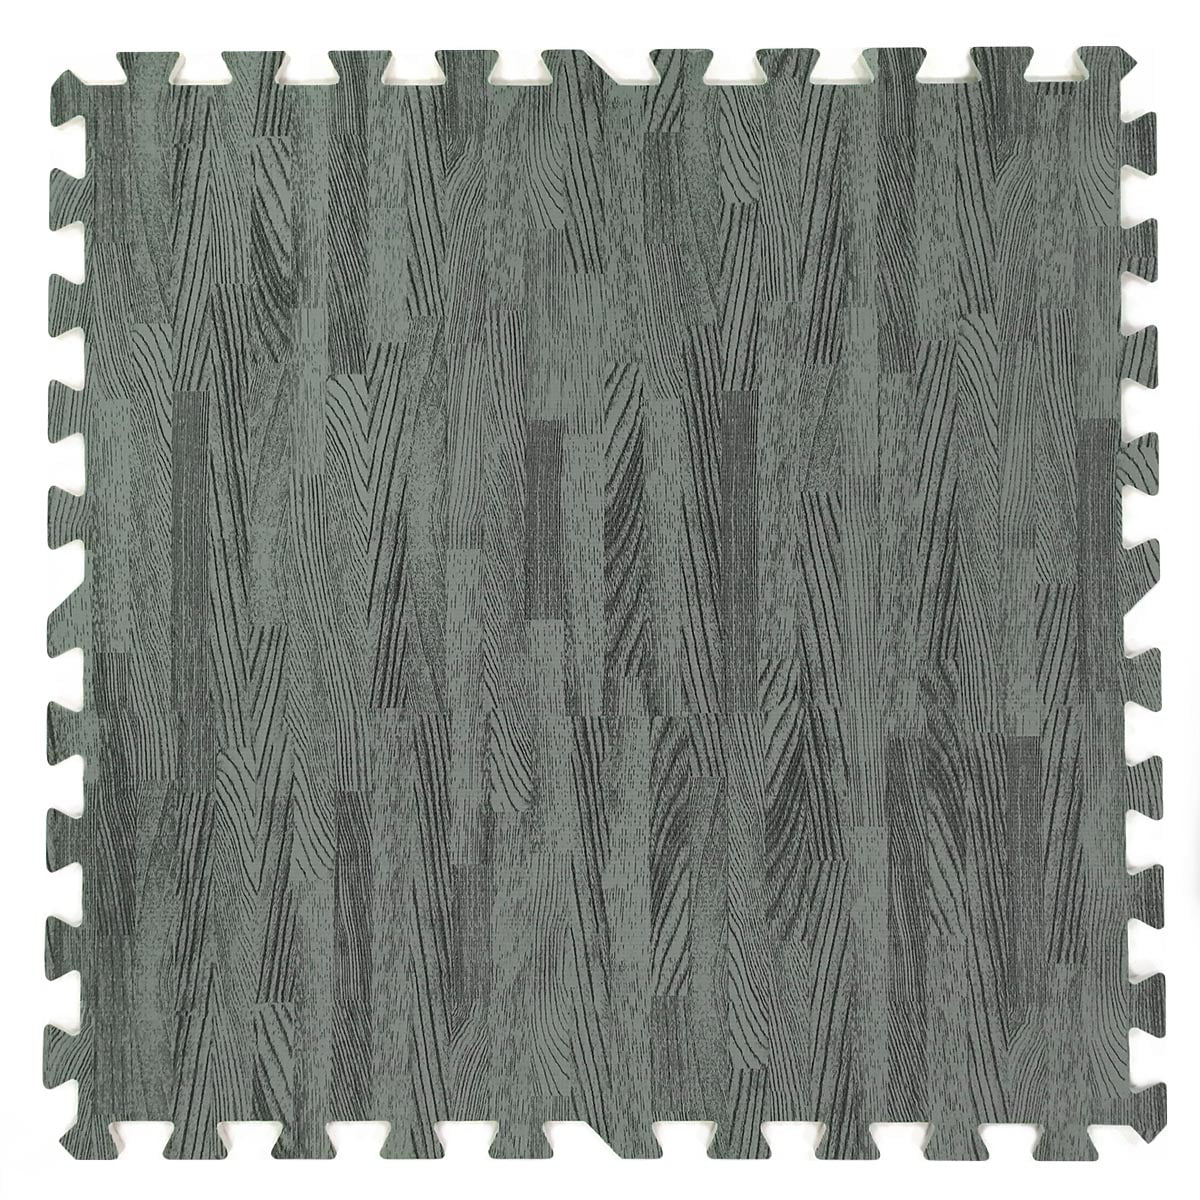 9 pcs Foam Puzzle Exercise Mat Pad Interlocking Floor Tiles Gray Wood Grain 